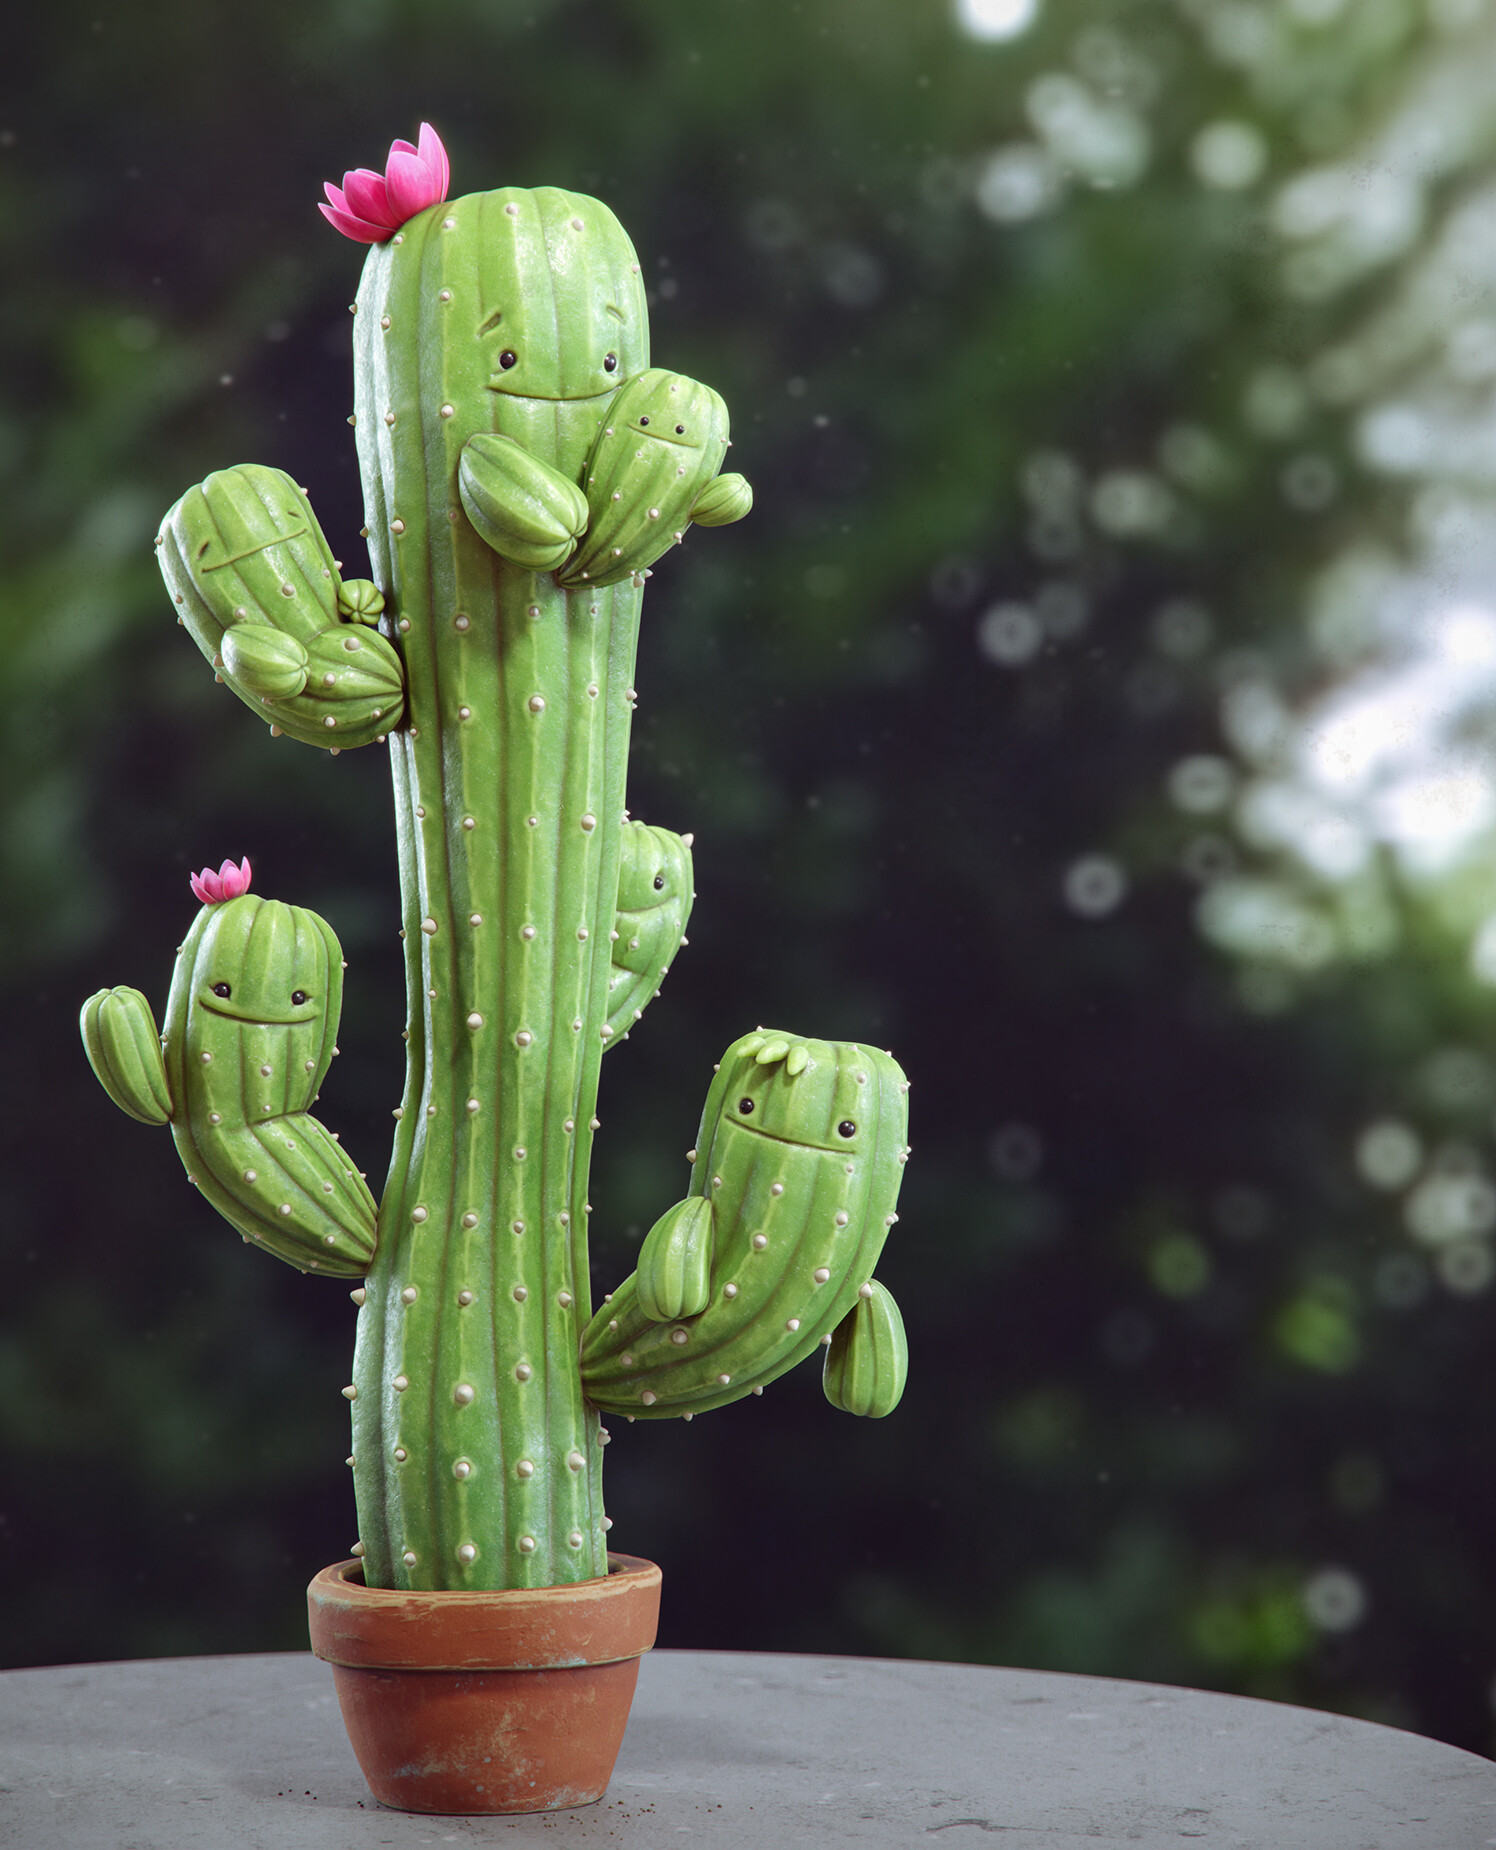 General 1496x1850 digital art cactus CGI portrait display smiling plants flowers